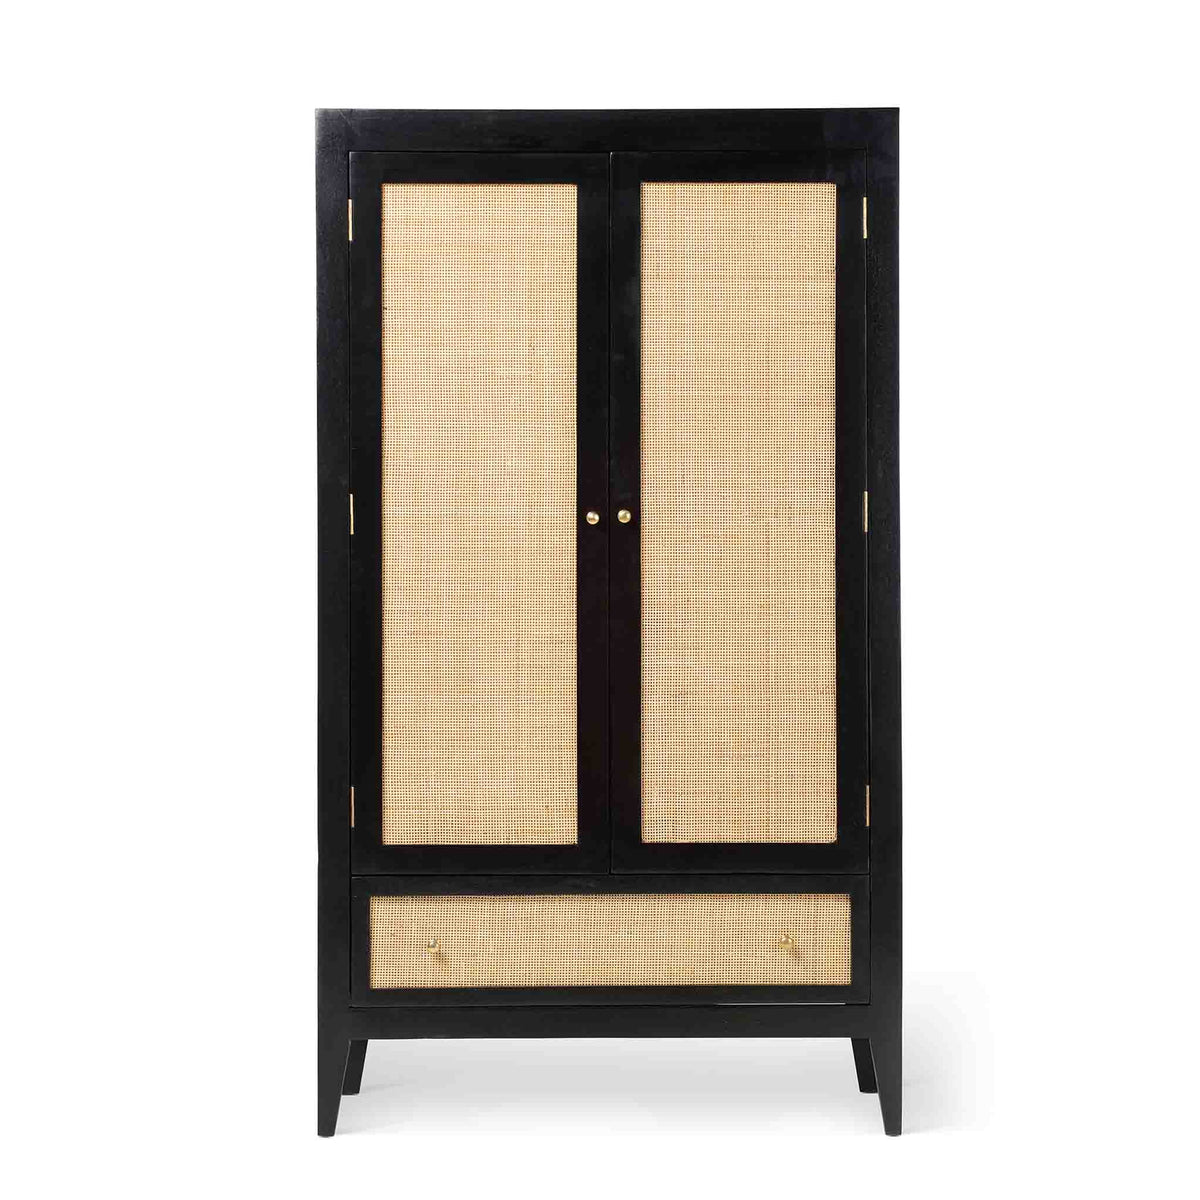 Venti black Mango Wood & Cane 2 Door Wardrobe with Drawer from Roseland Furniture